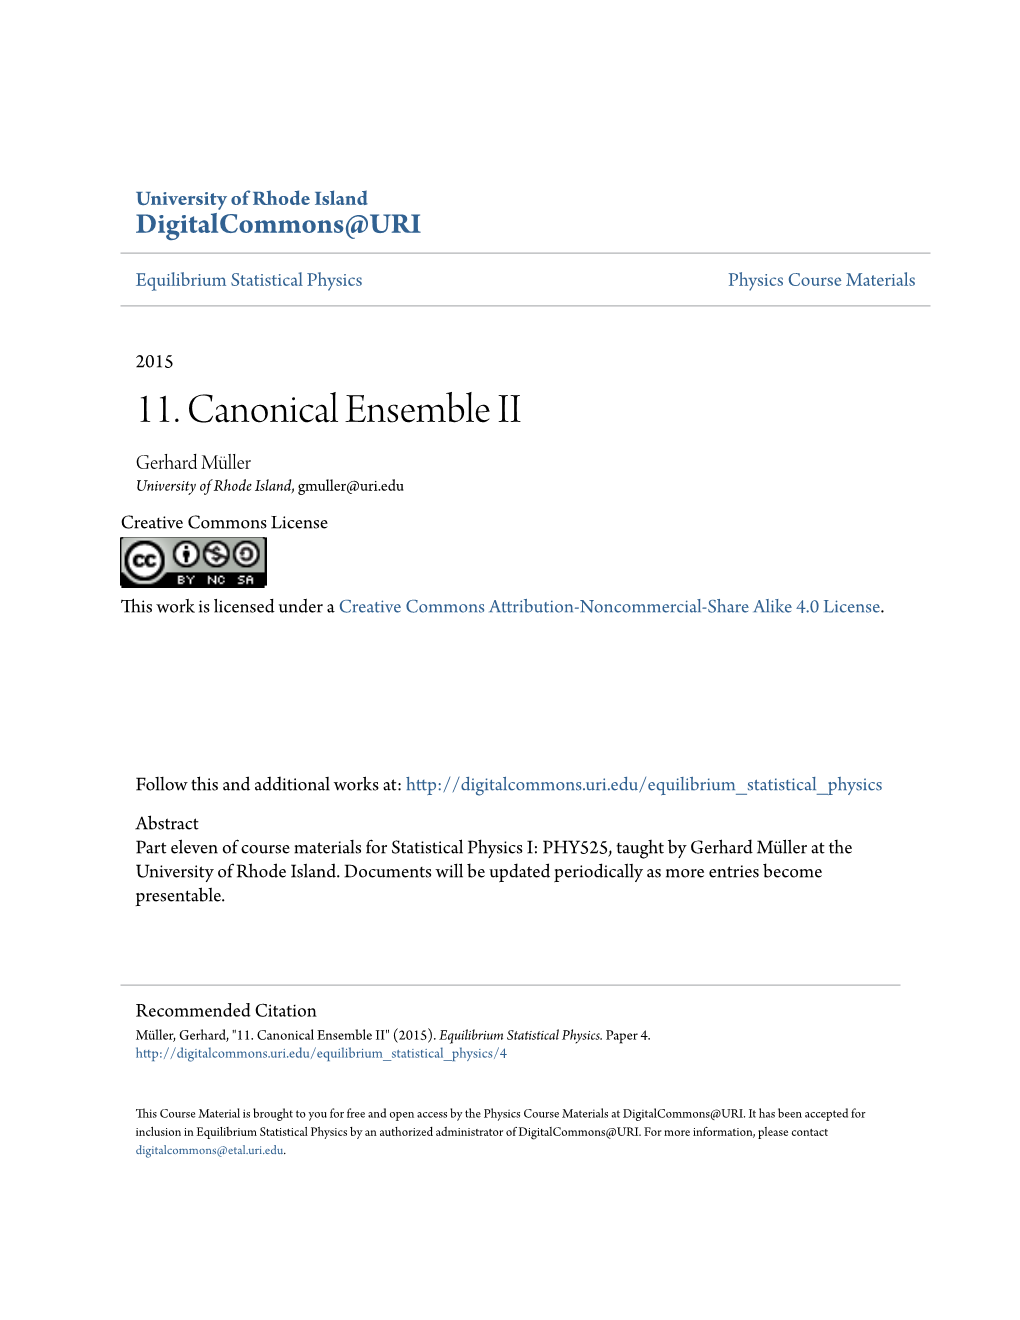 11. Canonical Ensemble II Gerhard Müller University of Rhode Island, Gmuller@Uri.Edu Creative Commons License